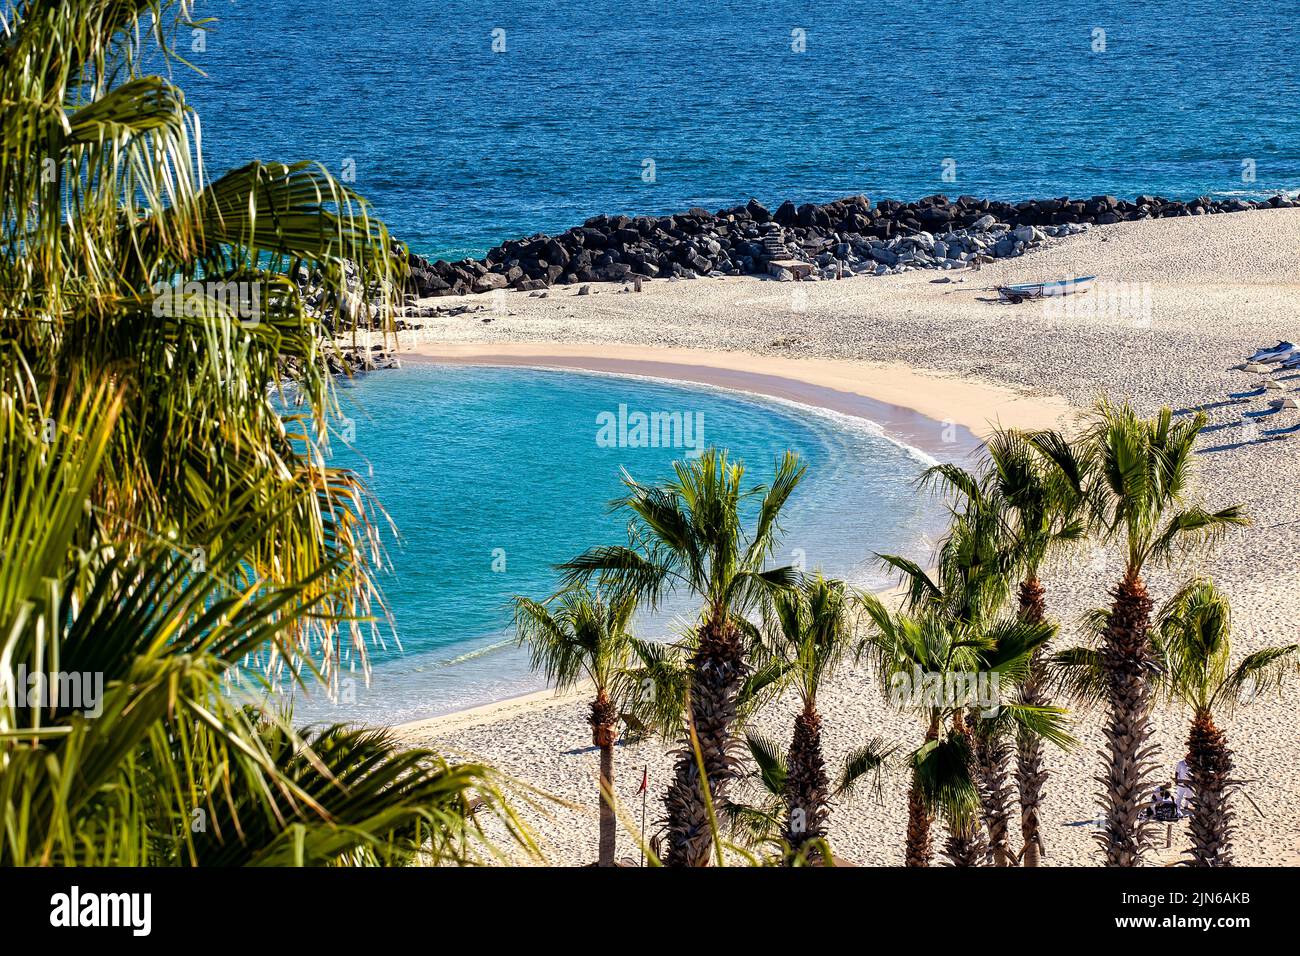 Sea of Cortez and sandy beaches in Cabo San Lucas, Mexico Stock Photo